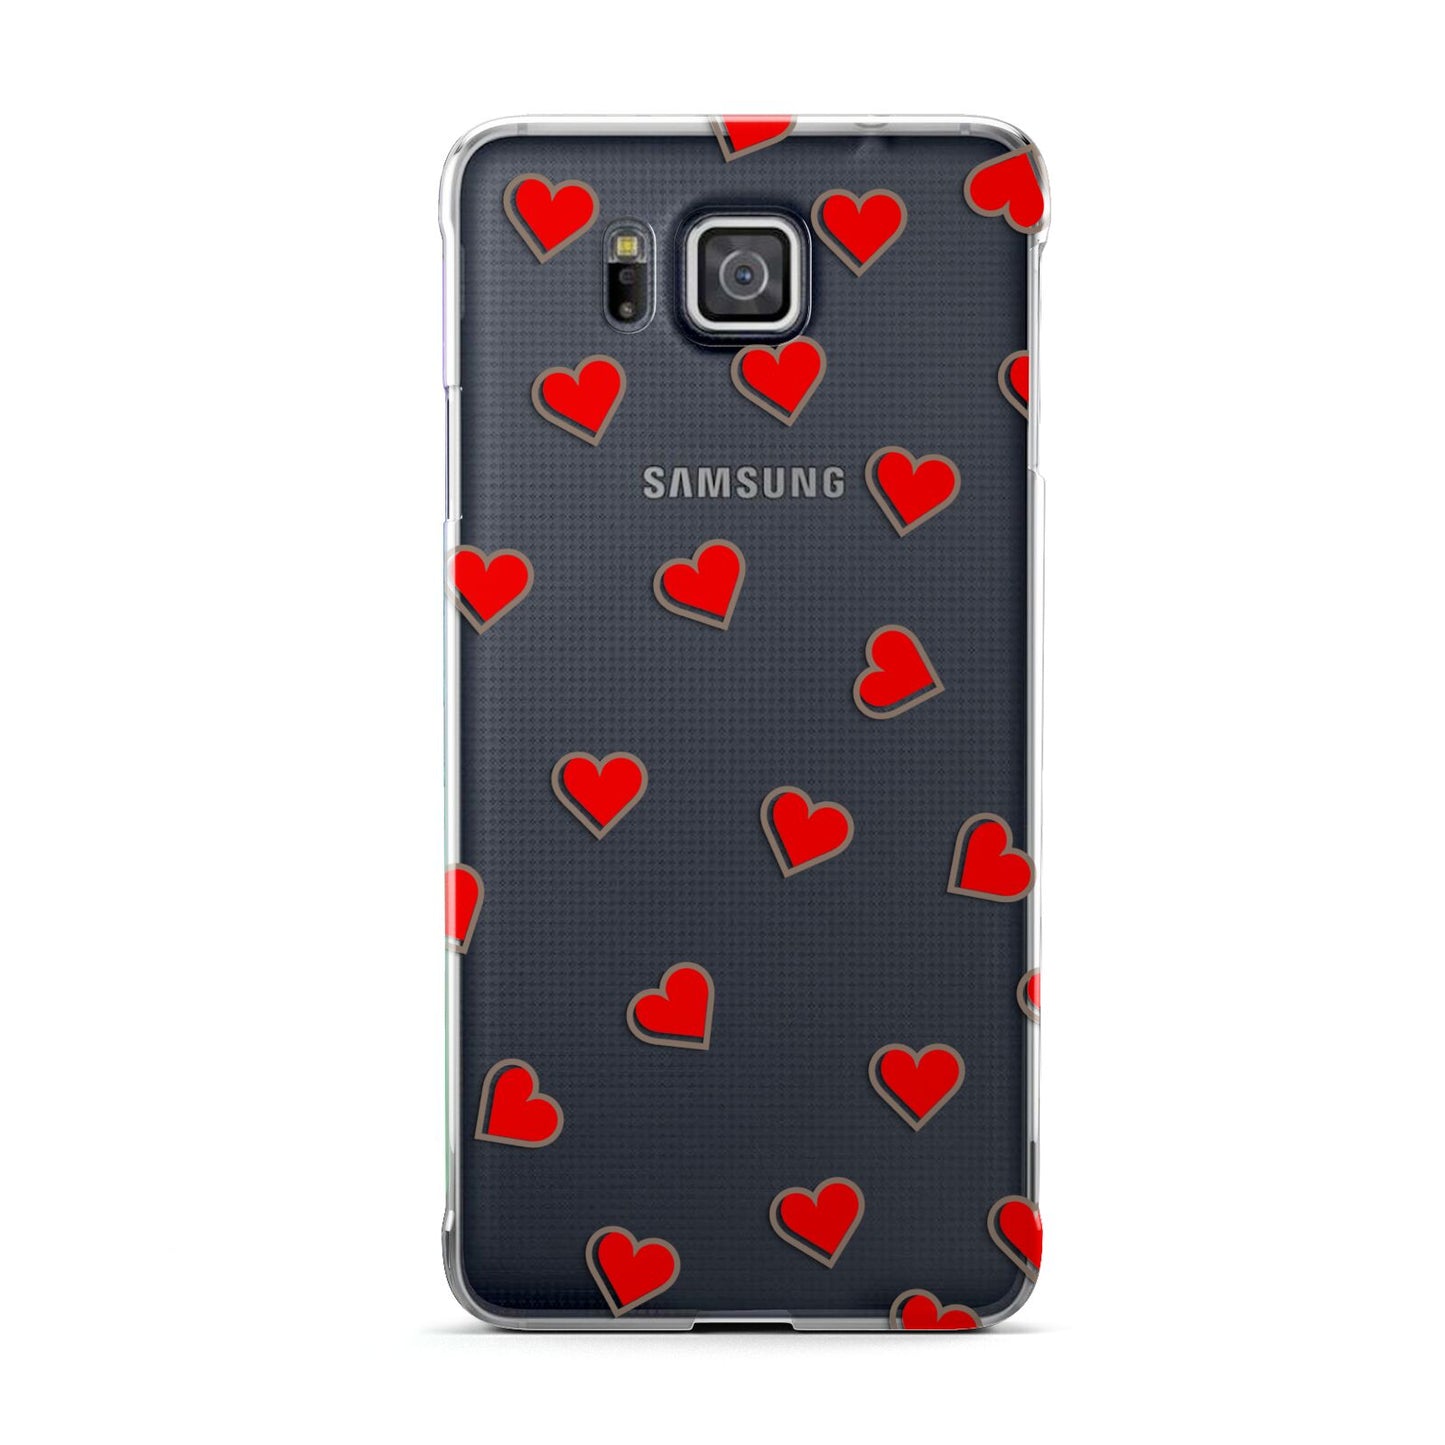 Cute Red Hearts Samsung Galaxy Alpha Case